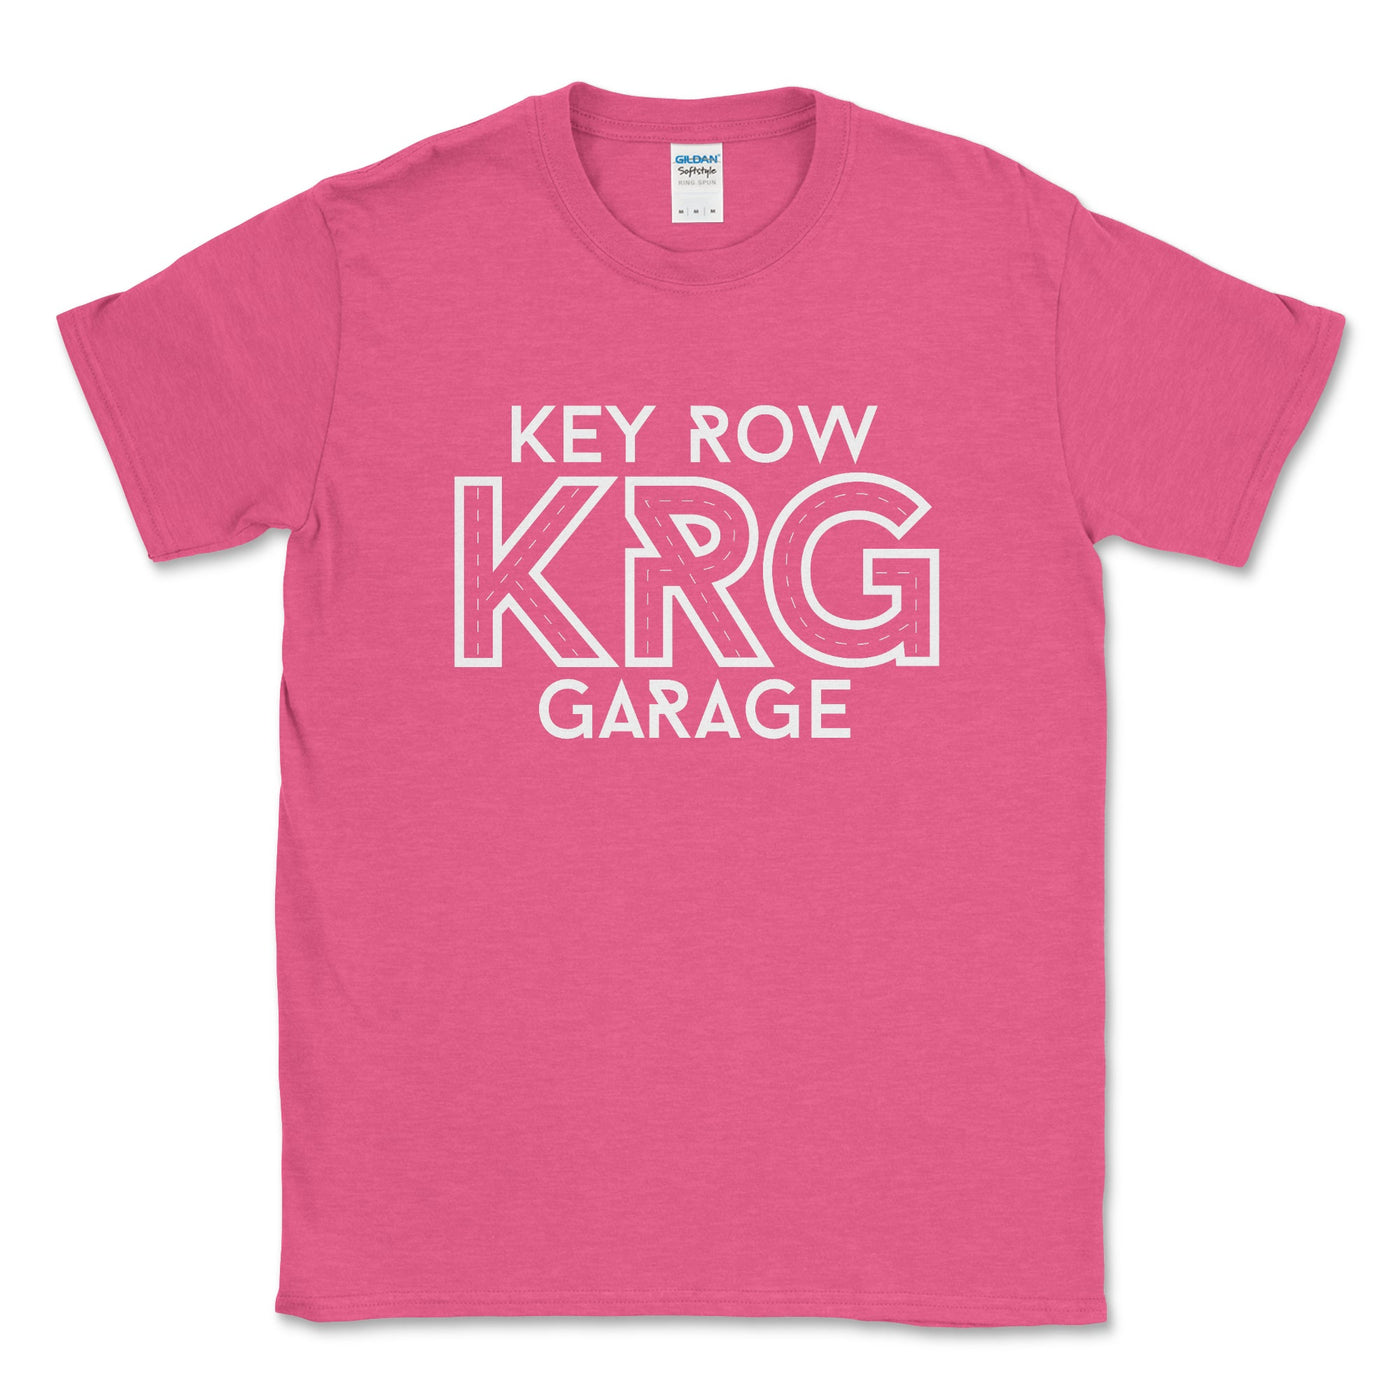 Key Row Garage Tee Shirt - Goats Trail Off - Road Apparel Company